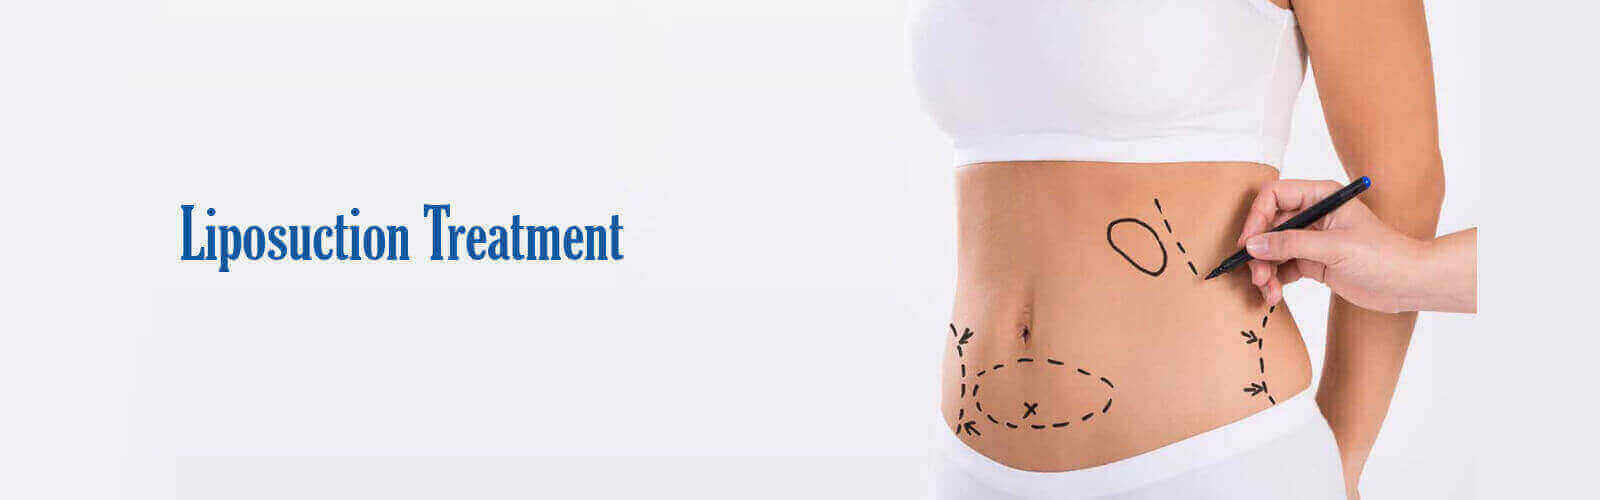 Liposuction Treatment in Thailand